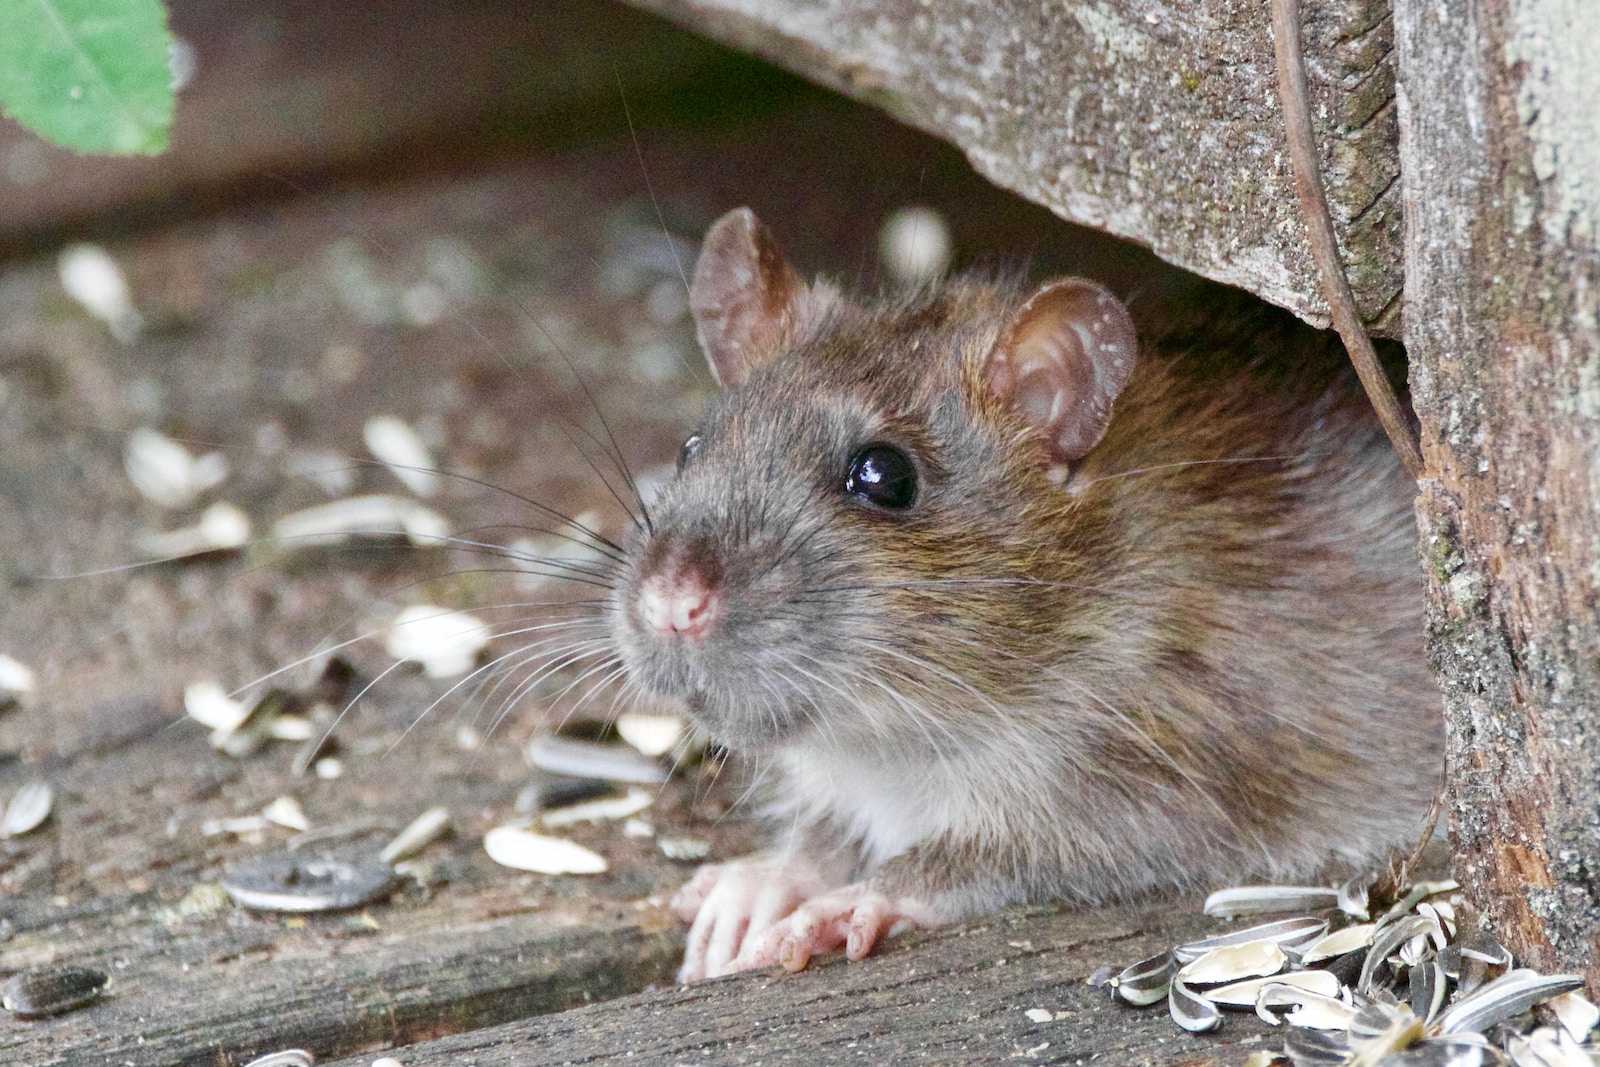 Ratten und Psychologie: Ihre Bedeutung in Verhaltensstudien